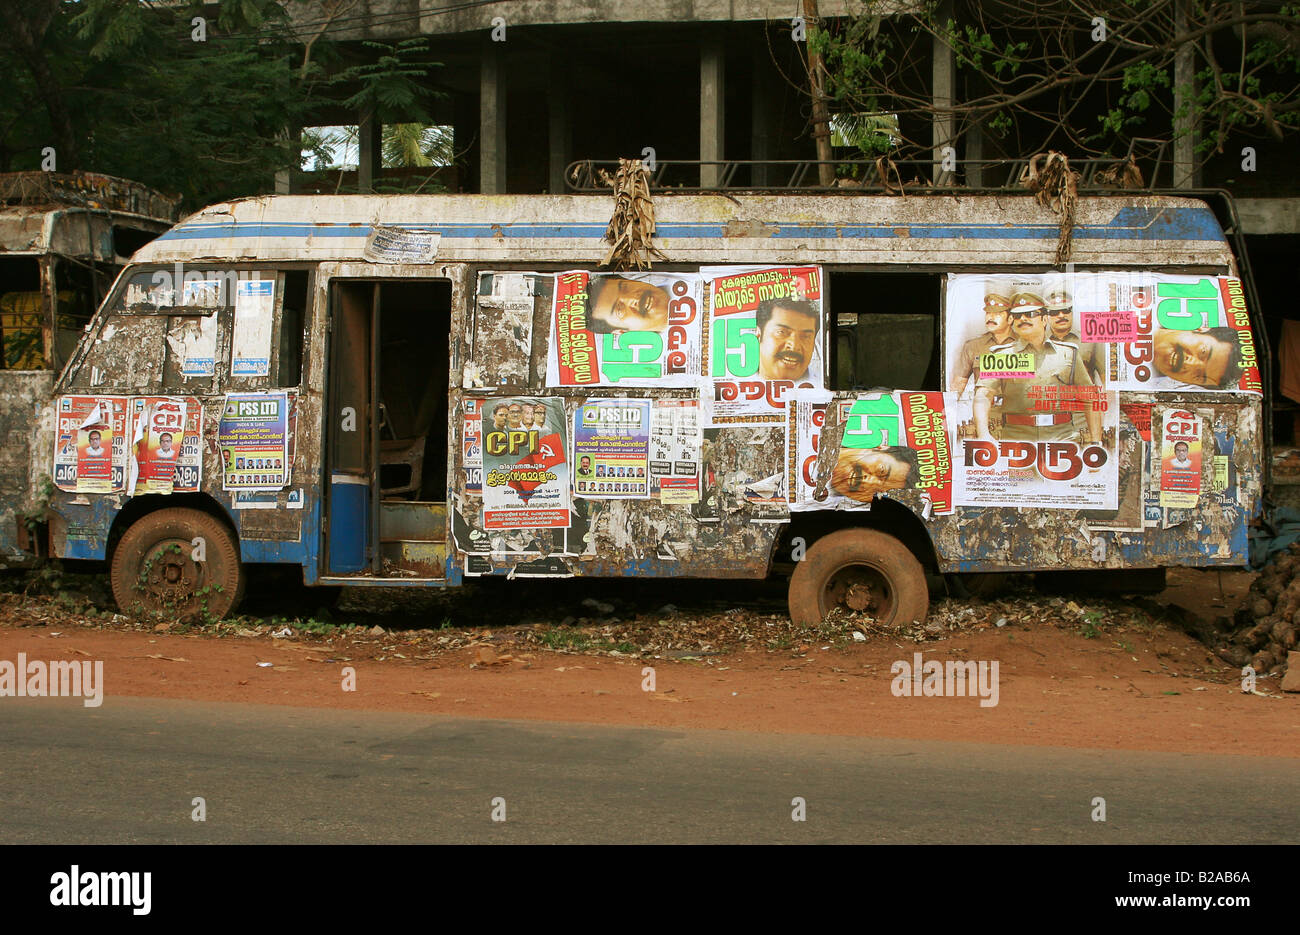 Abandoned bus used as a billboard Kerala India Stock Photo